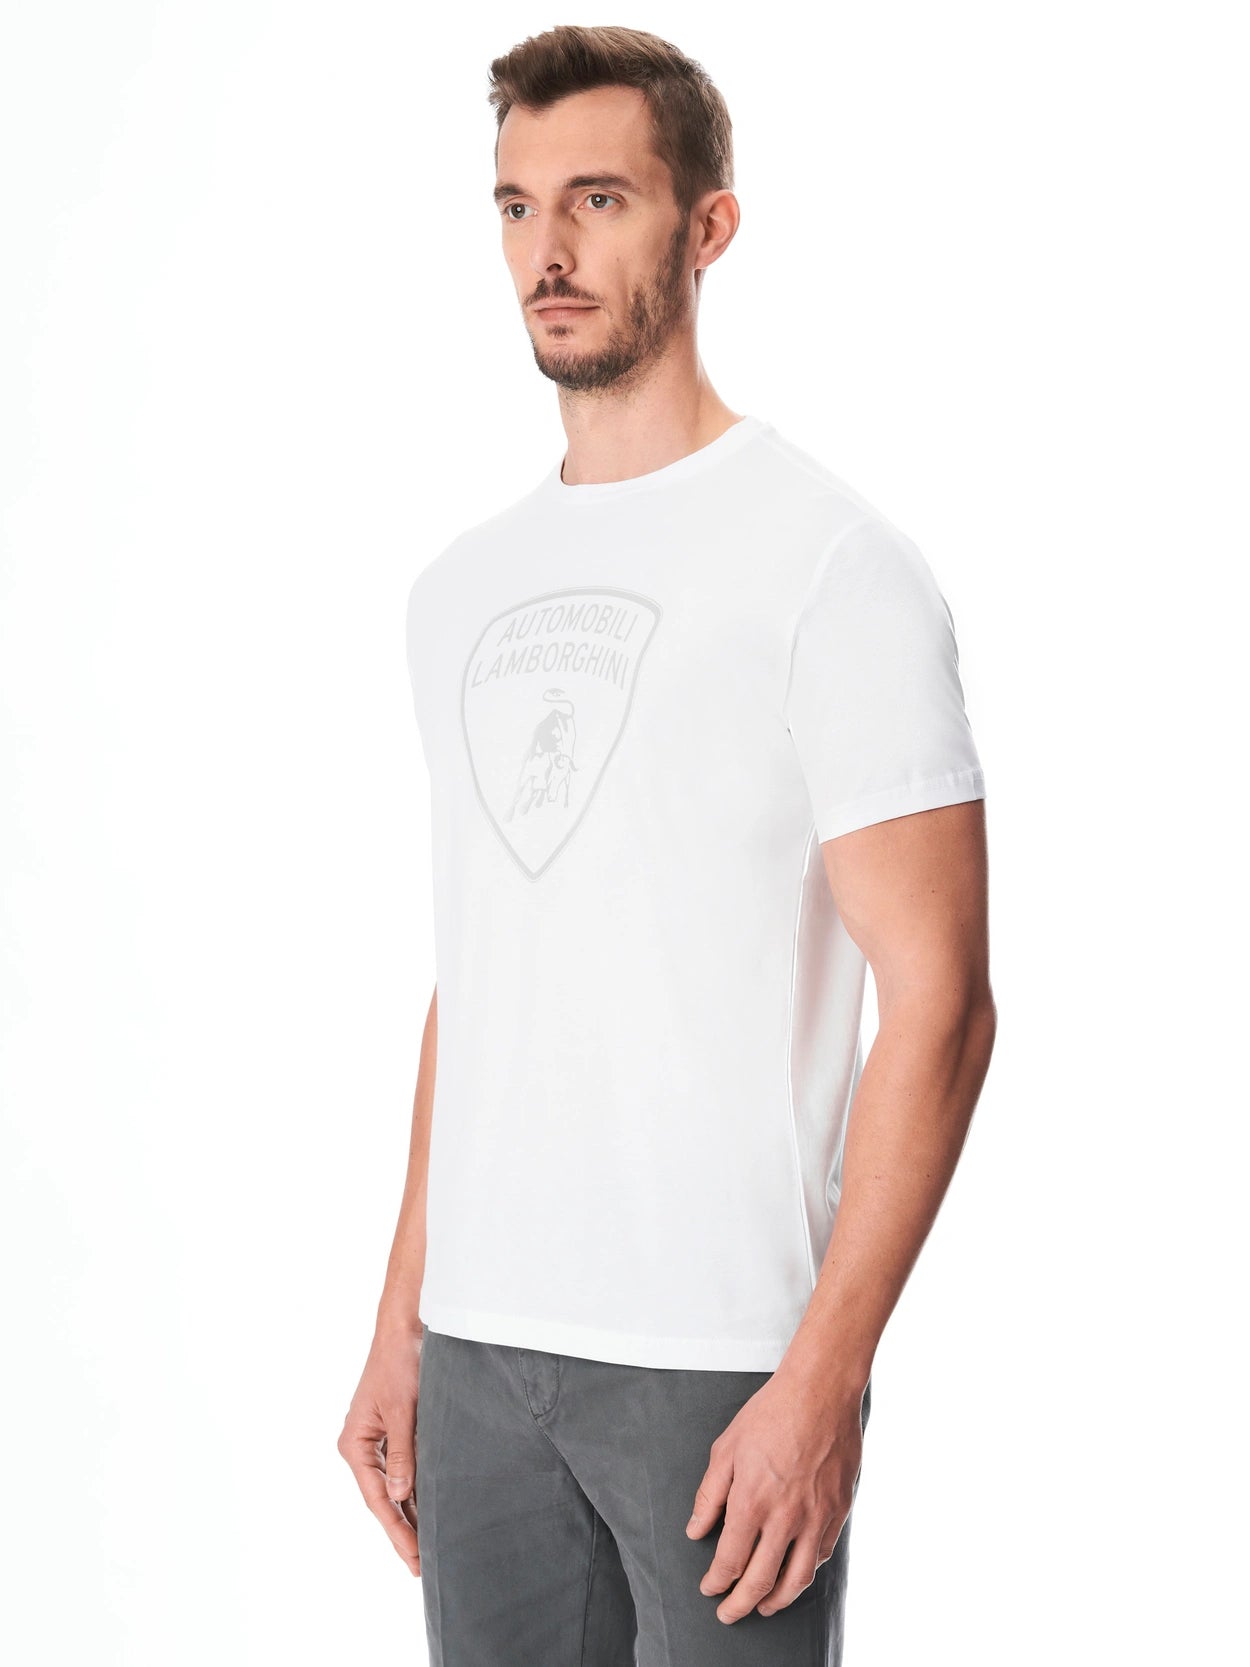 Automobili Lamborghini Iconic Big Shield Men's Crew Neck T-shirt - White